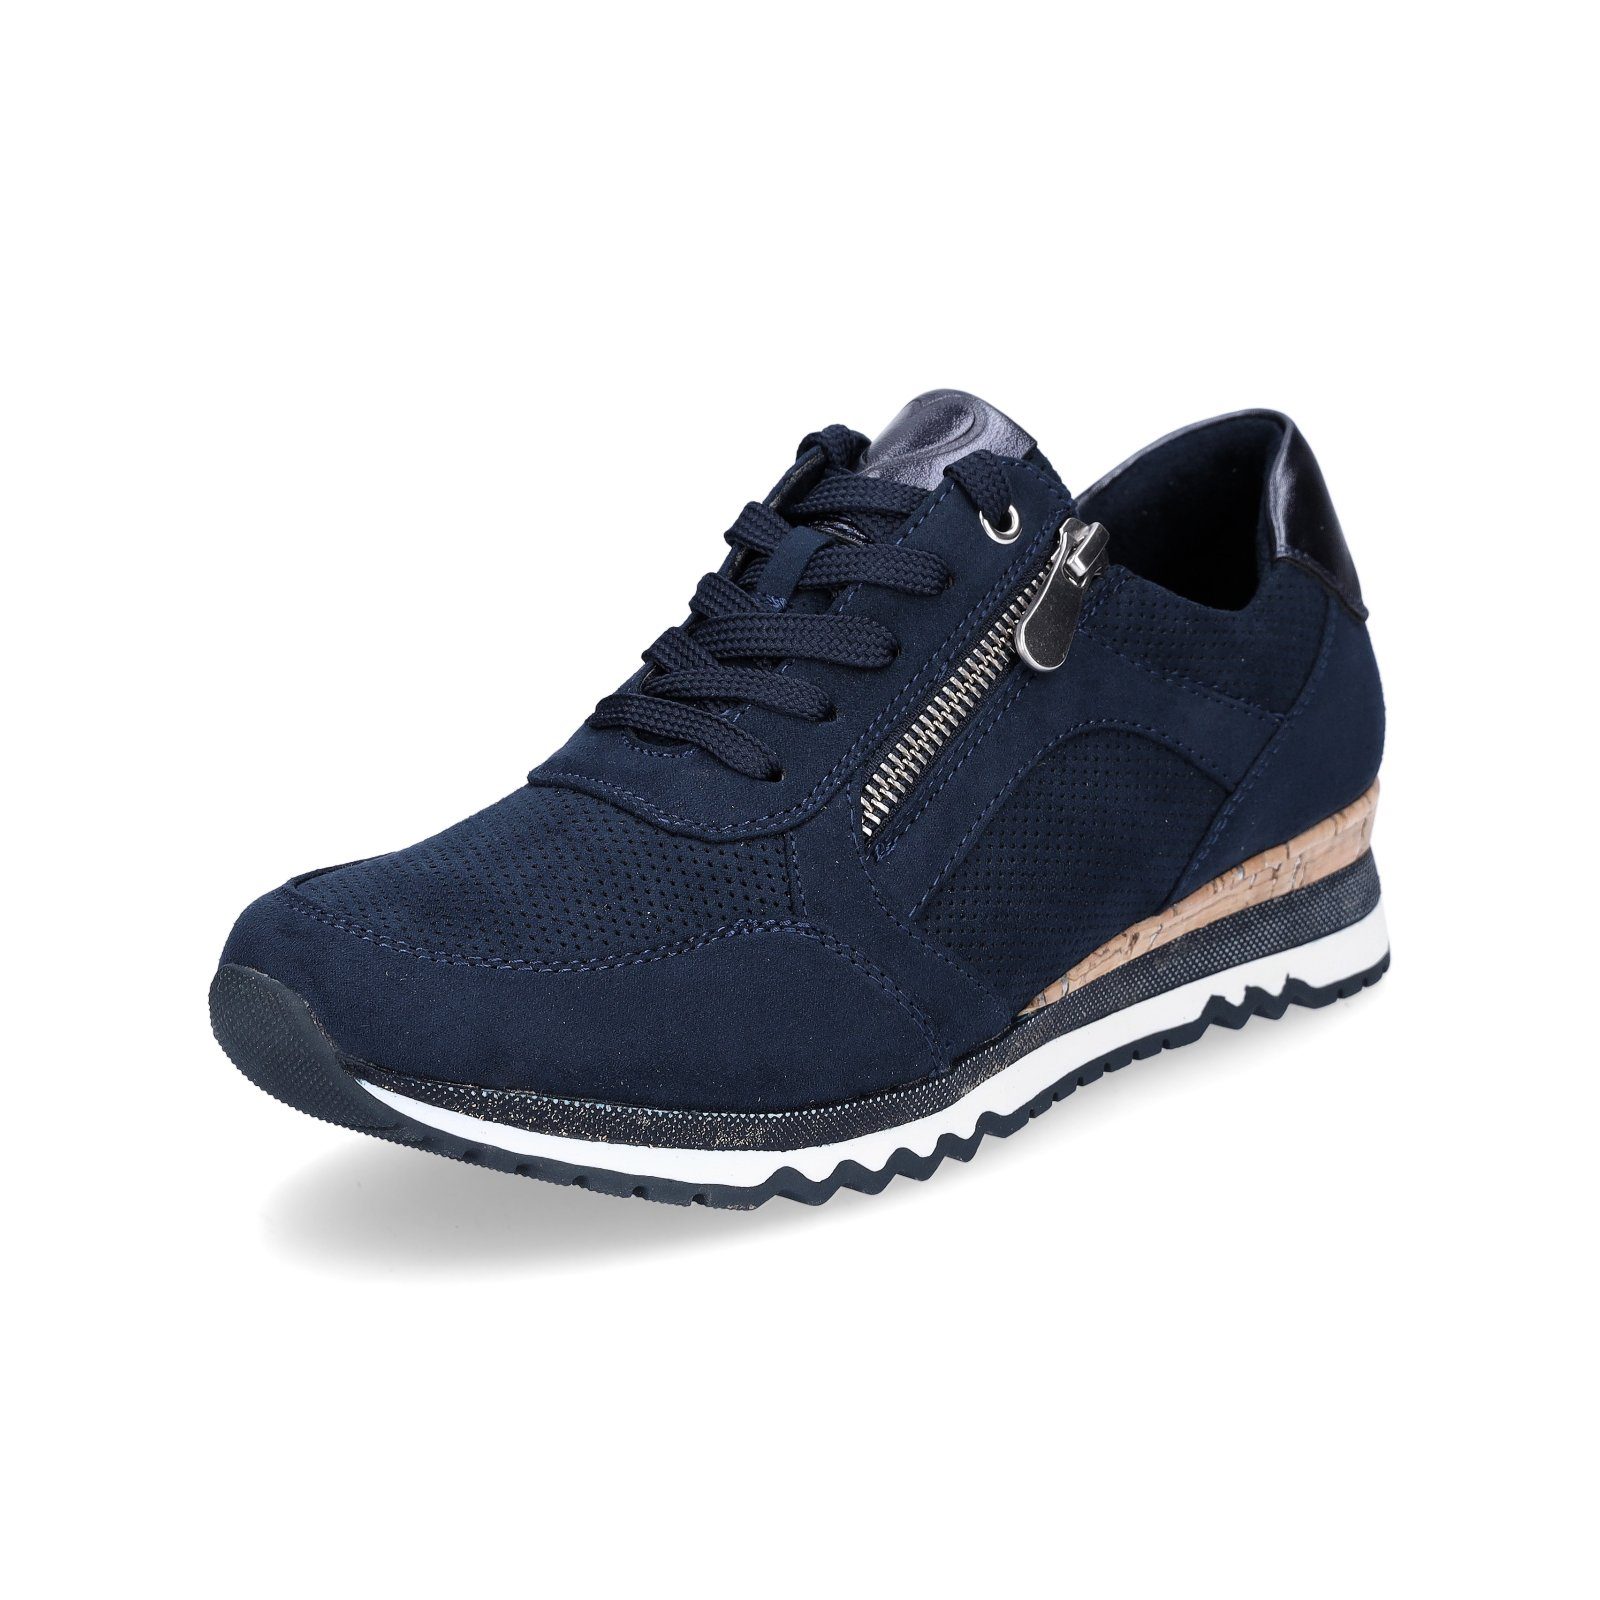 MARCO TOZZI Marco Tozzi Damen navy Sneaker blau COMB NAVY 890 Sneaker